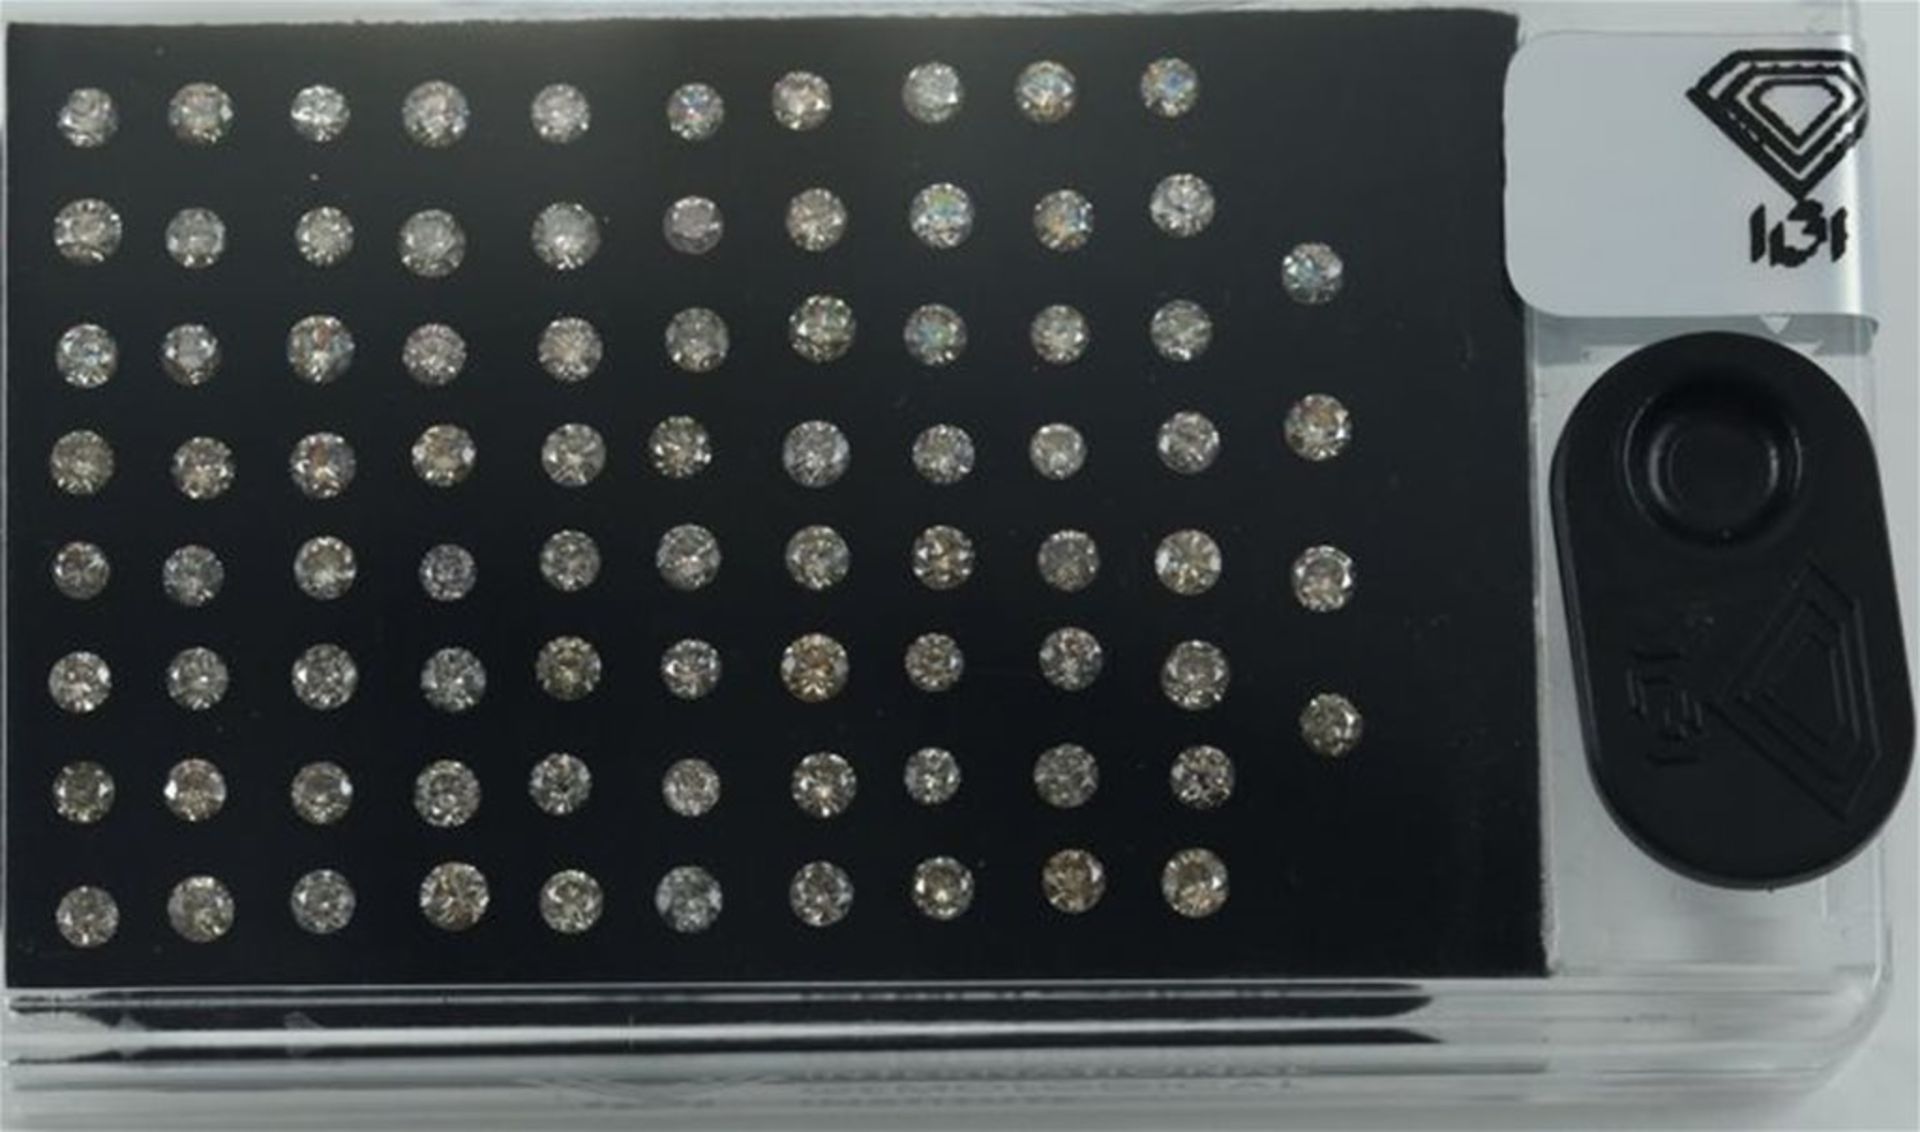 IGI Sealed 3.42 ct. "Diamond D Box" - Light Brown - Image 4 of 4